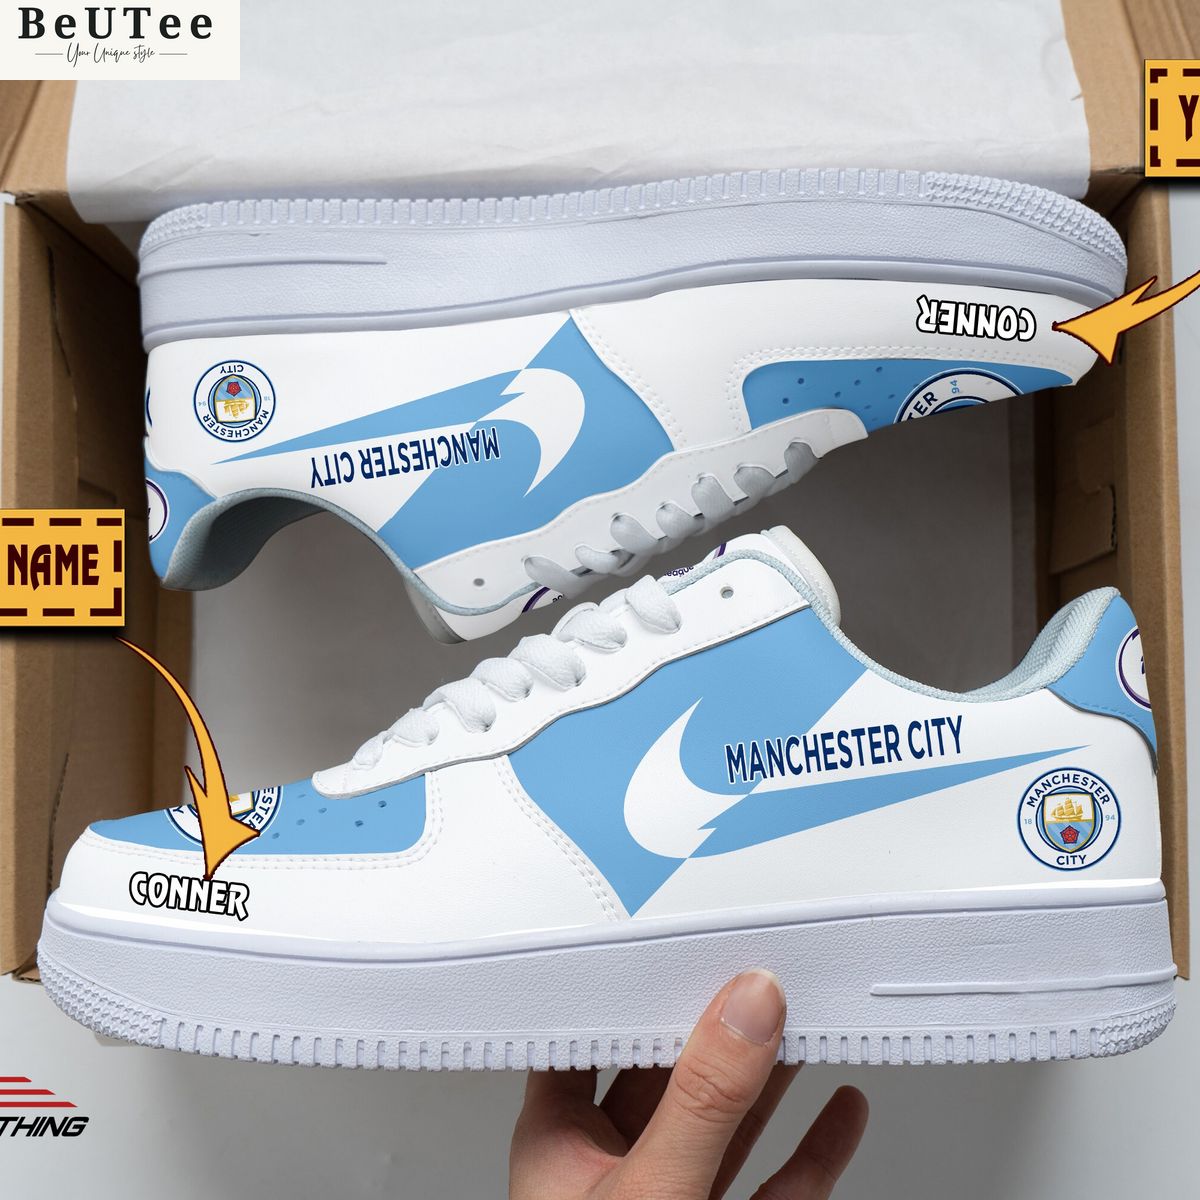 premier league manchester city f c personalized air force 1 shoes 1 Figd7.jpg